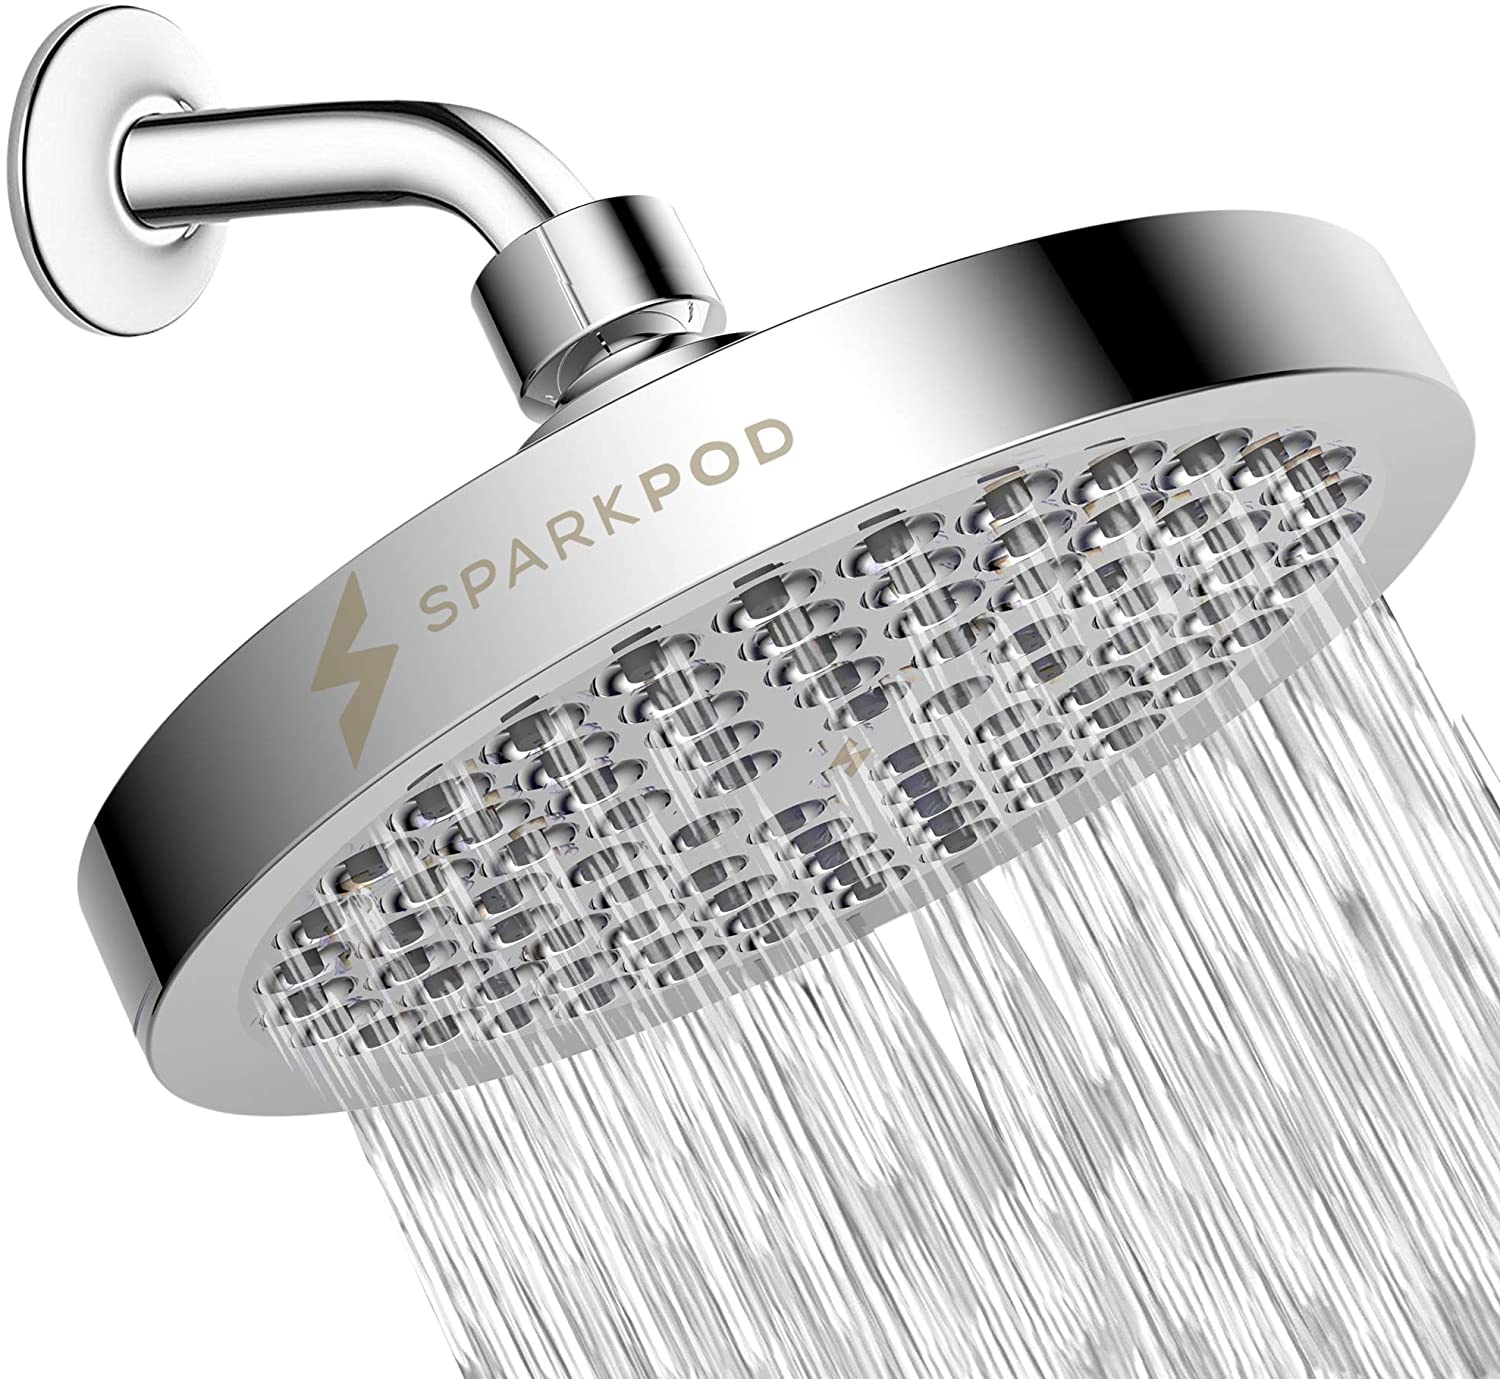 SparkPod High-Pressure Rain Shower Head